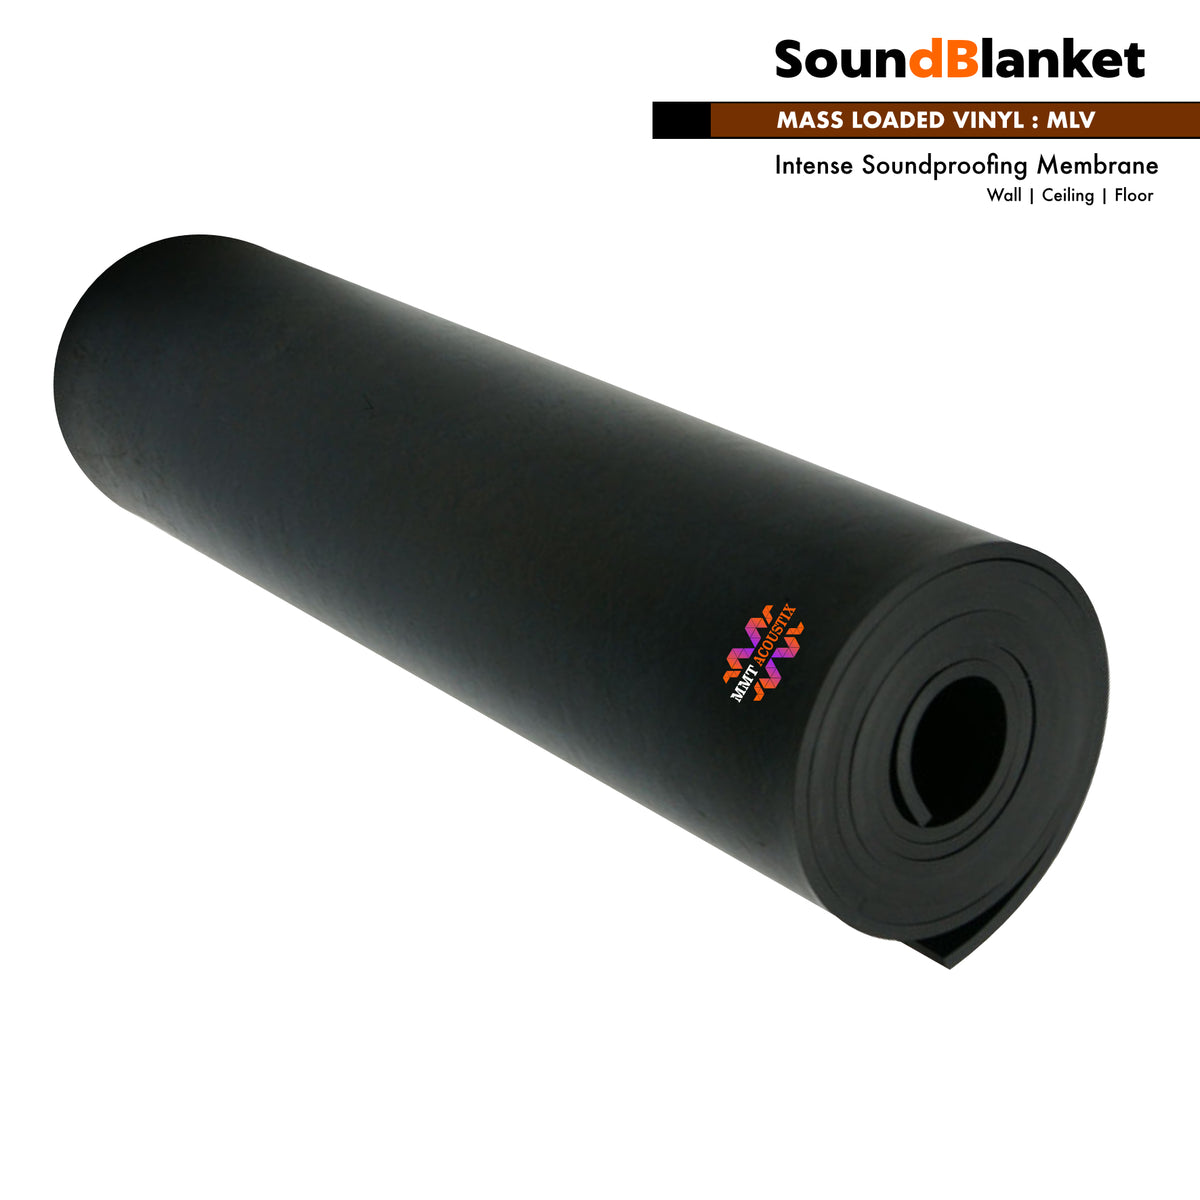 SoundBlanket® Mass Loaded Vinyl nashville, Soundproofing MLV manufacturer  nashville, Soundproofing Membrane nashville